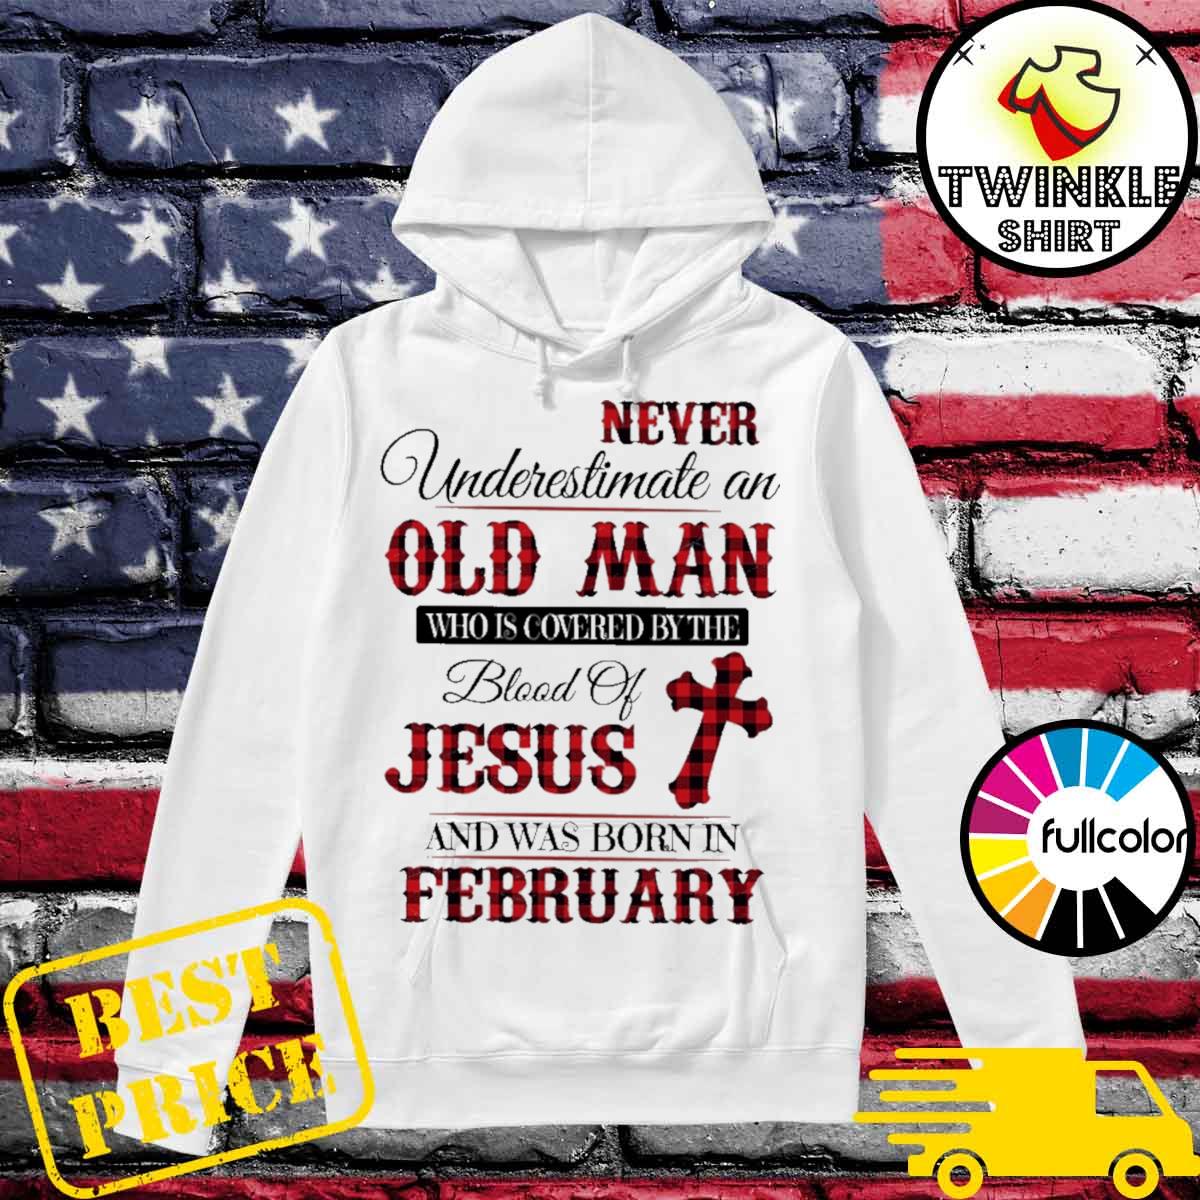 Was jesus born in february